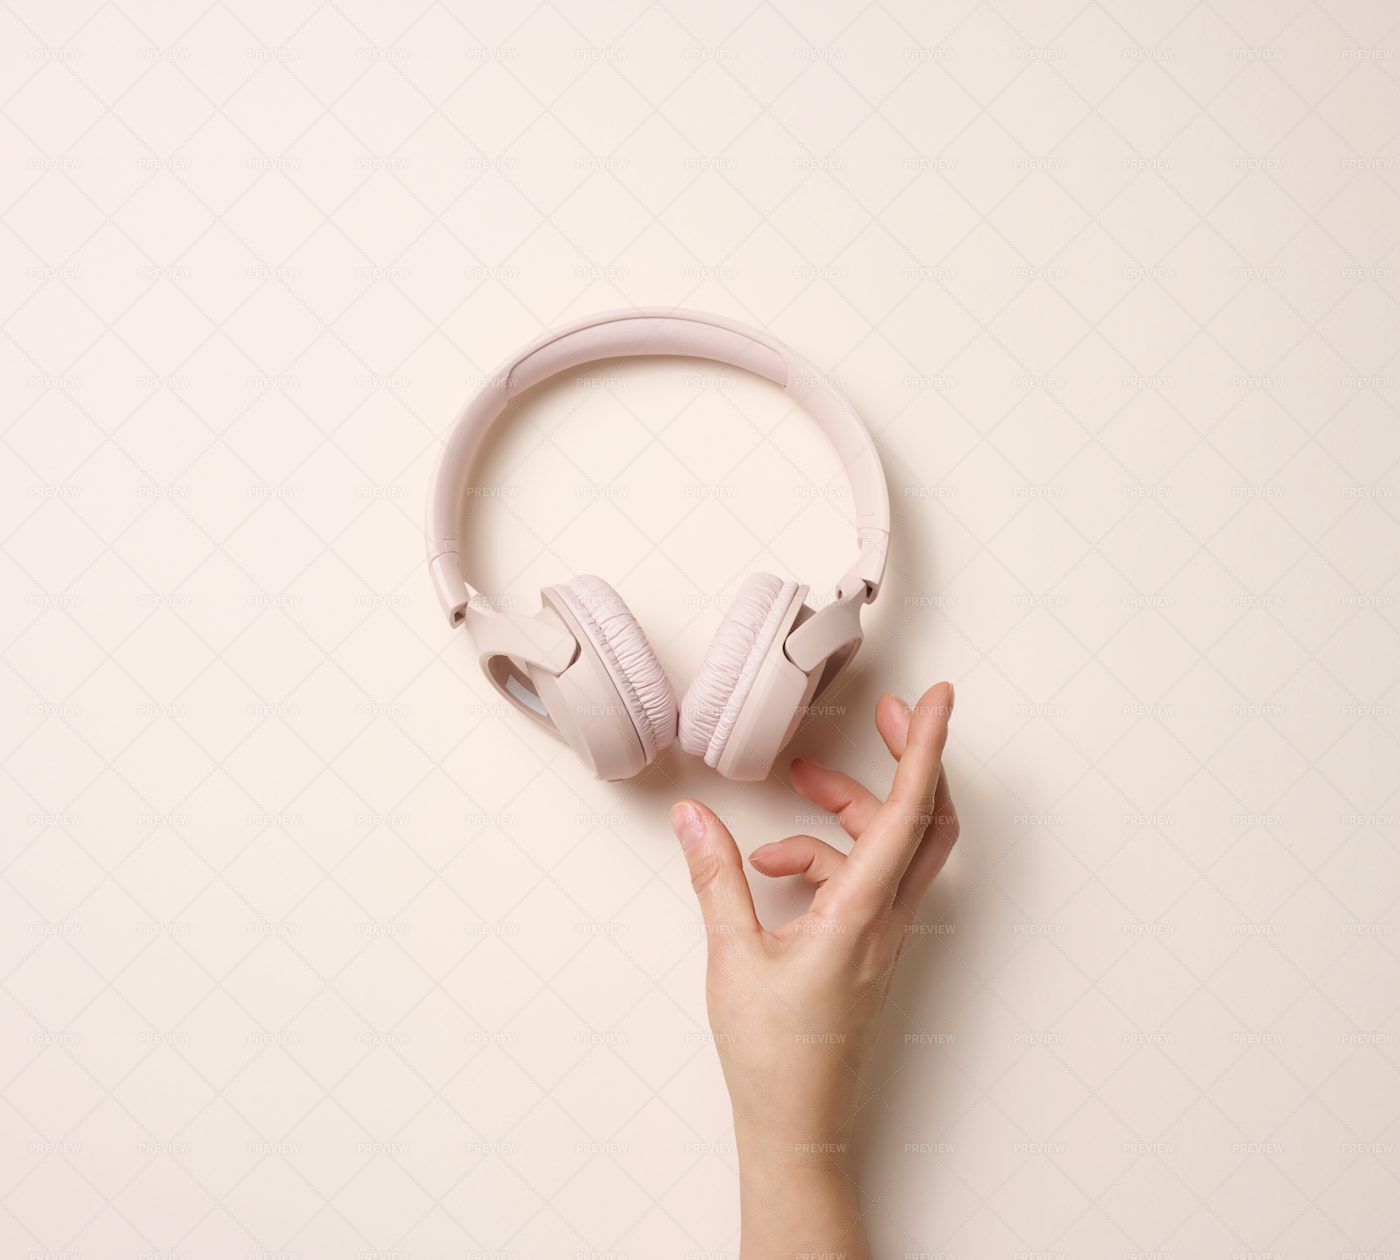 Hand Hold Pink Wireless Headphone: Stock Photos